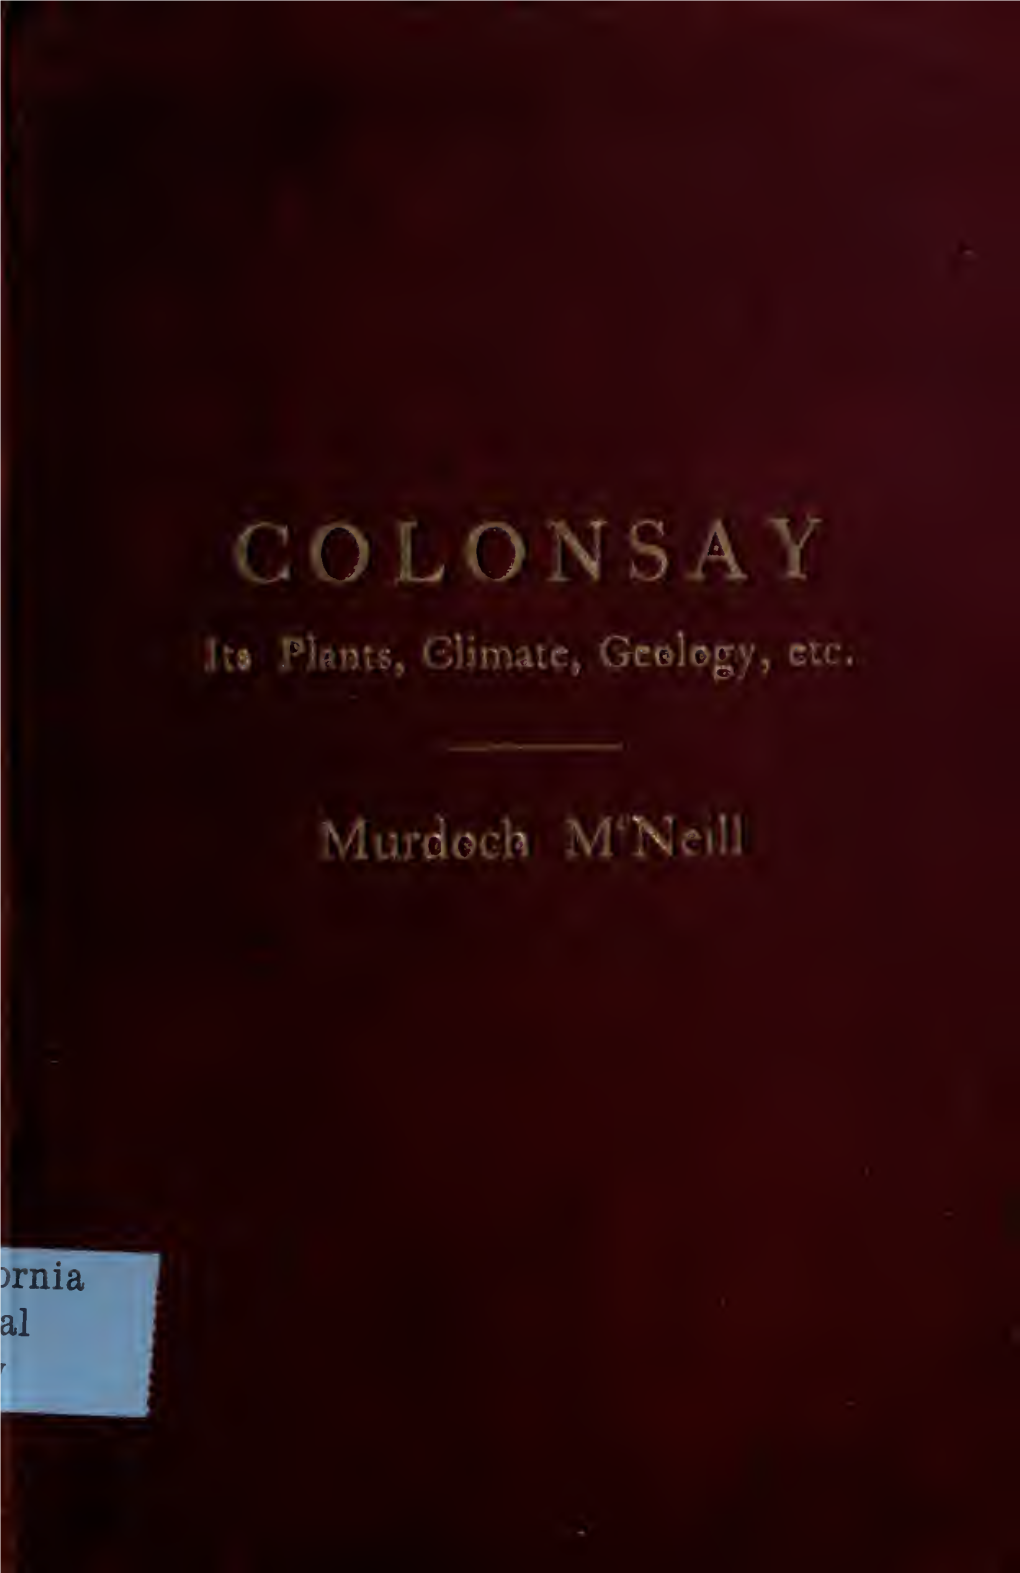 Colonsay Its Plants, Etc